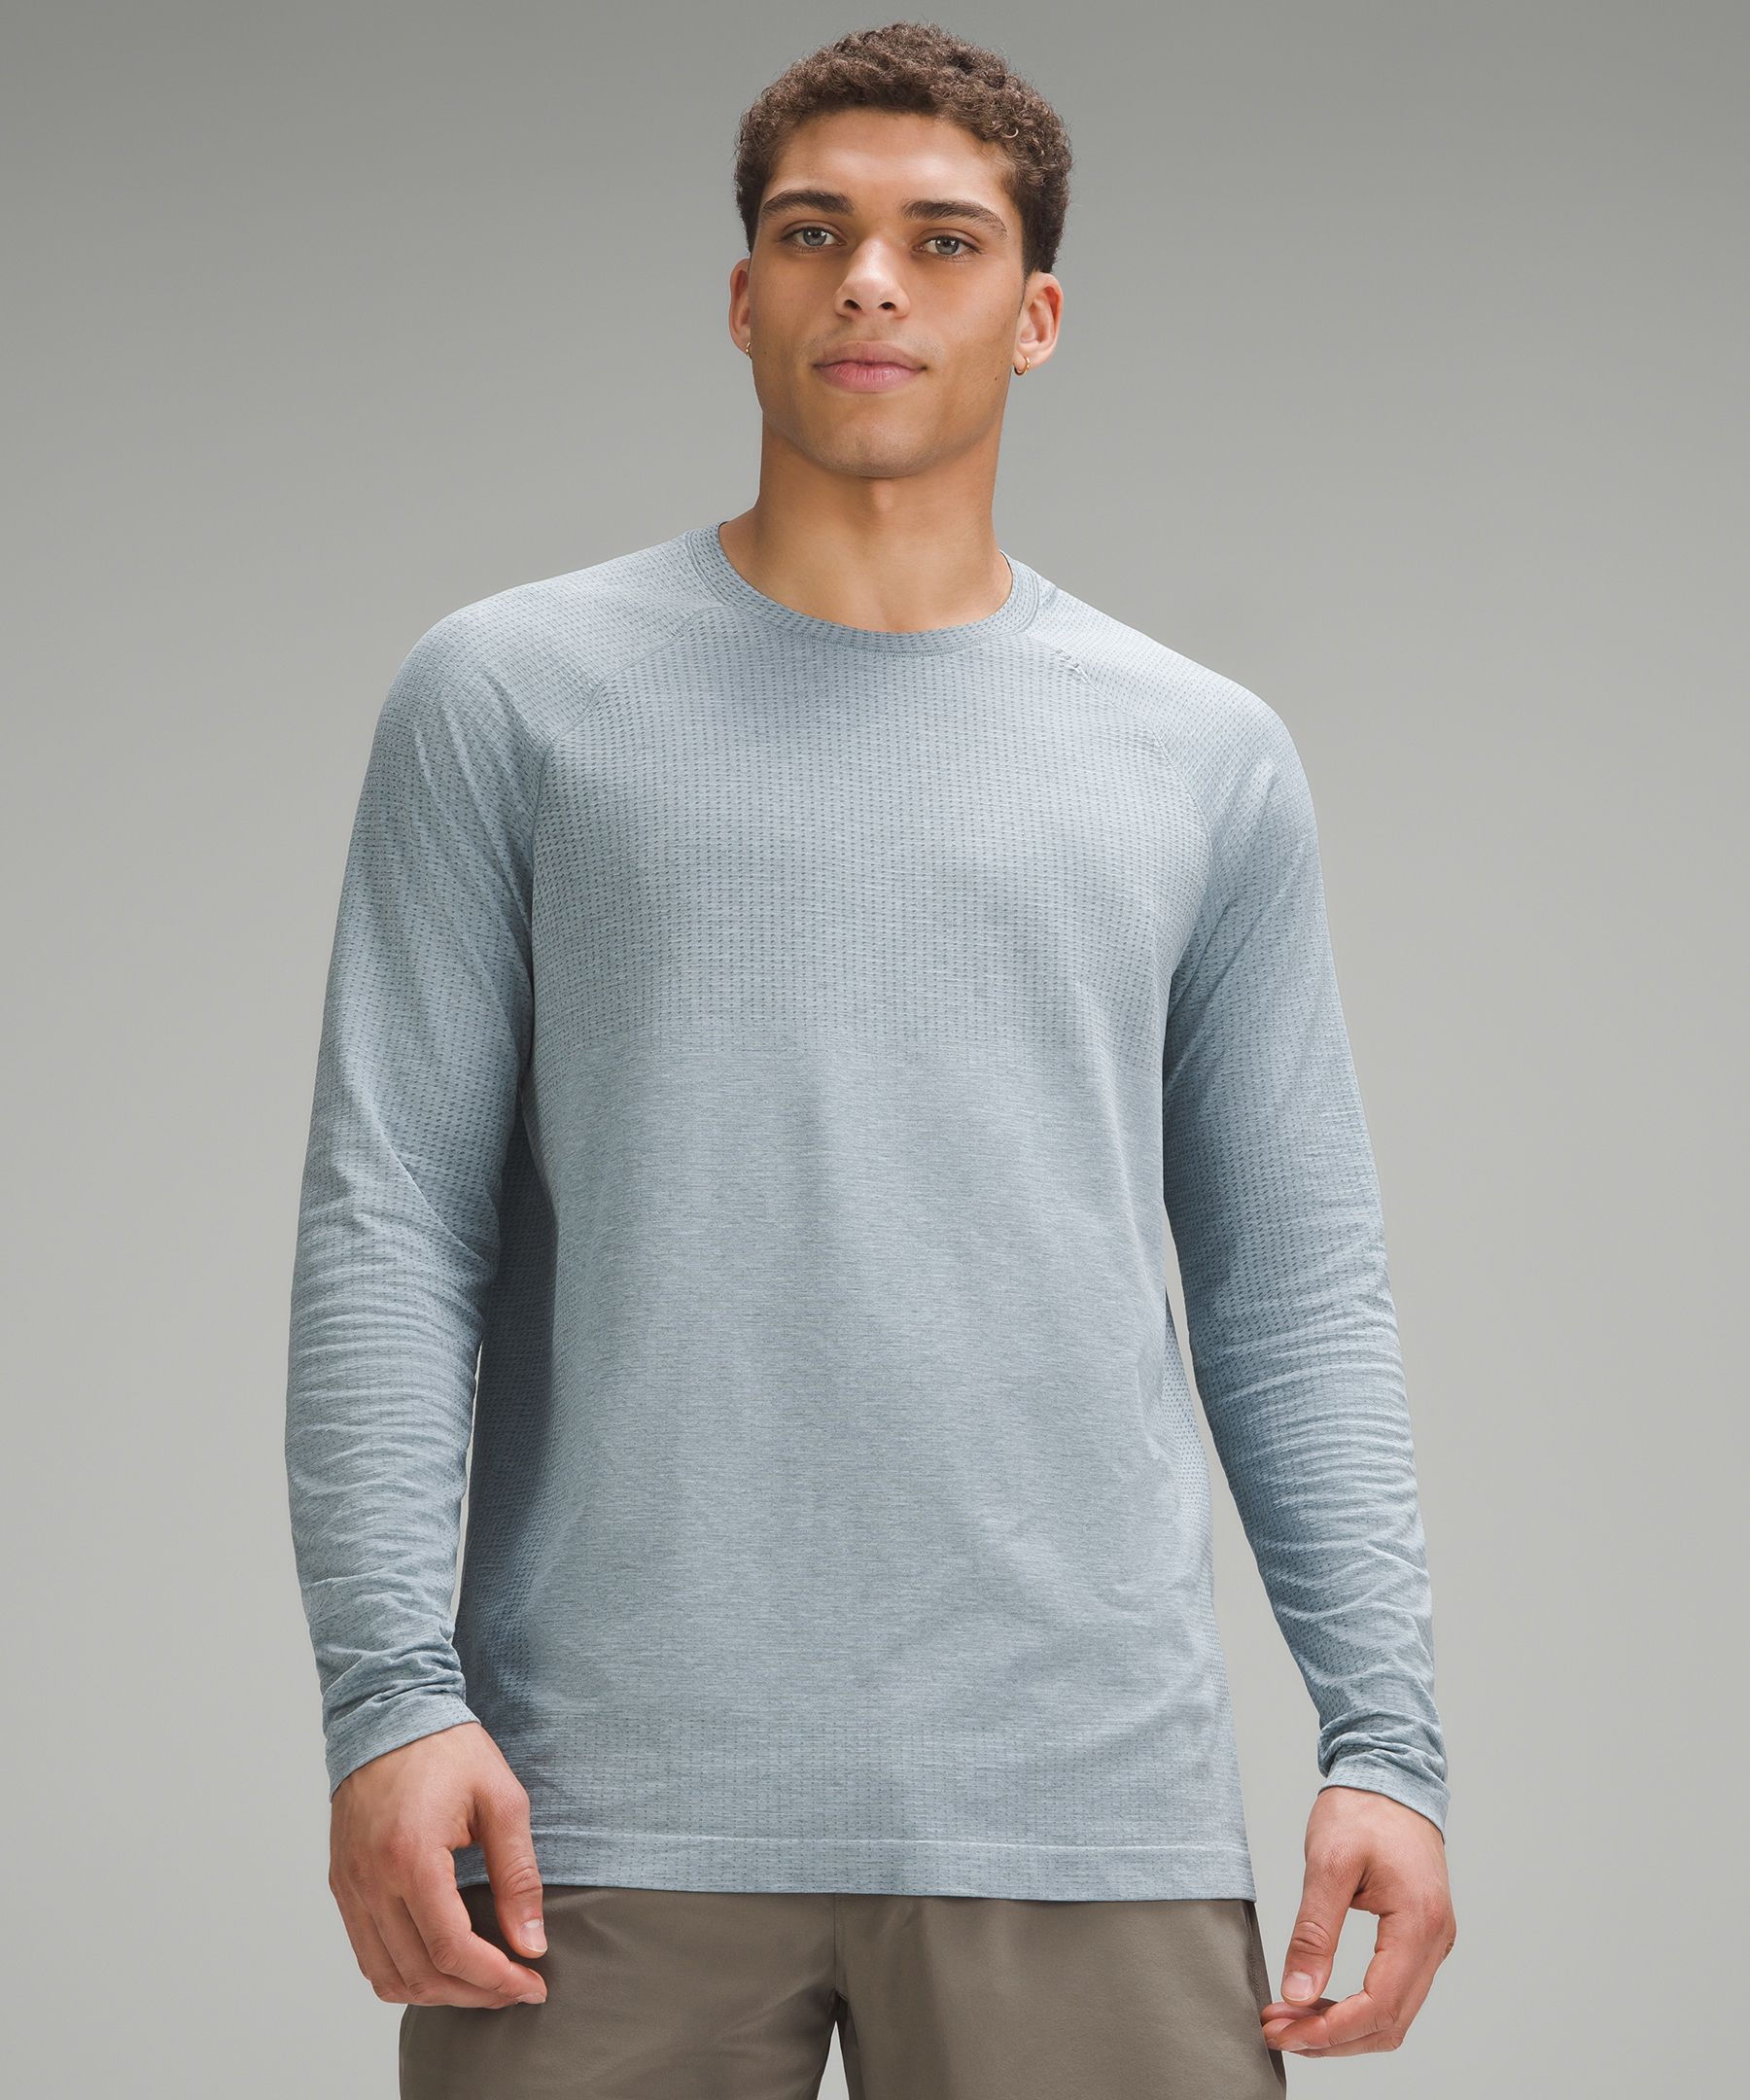 Metal Vent Tech Long-Sleeve Shirt | Men's Long Sleeve Shirts